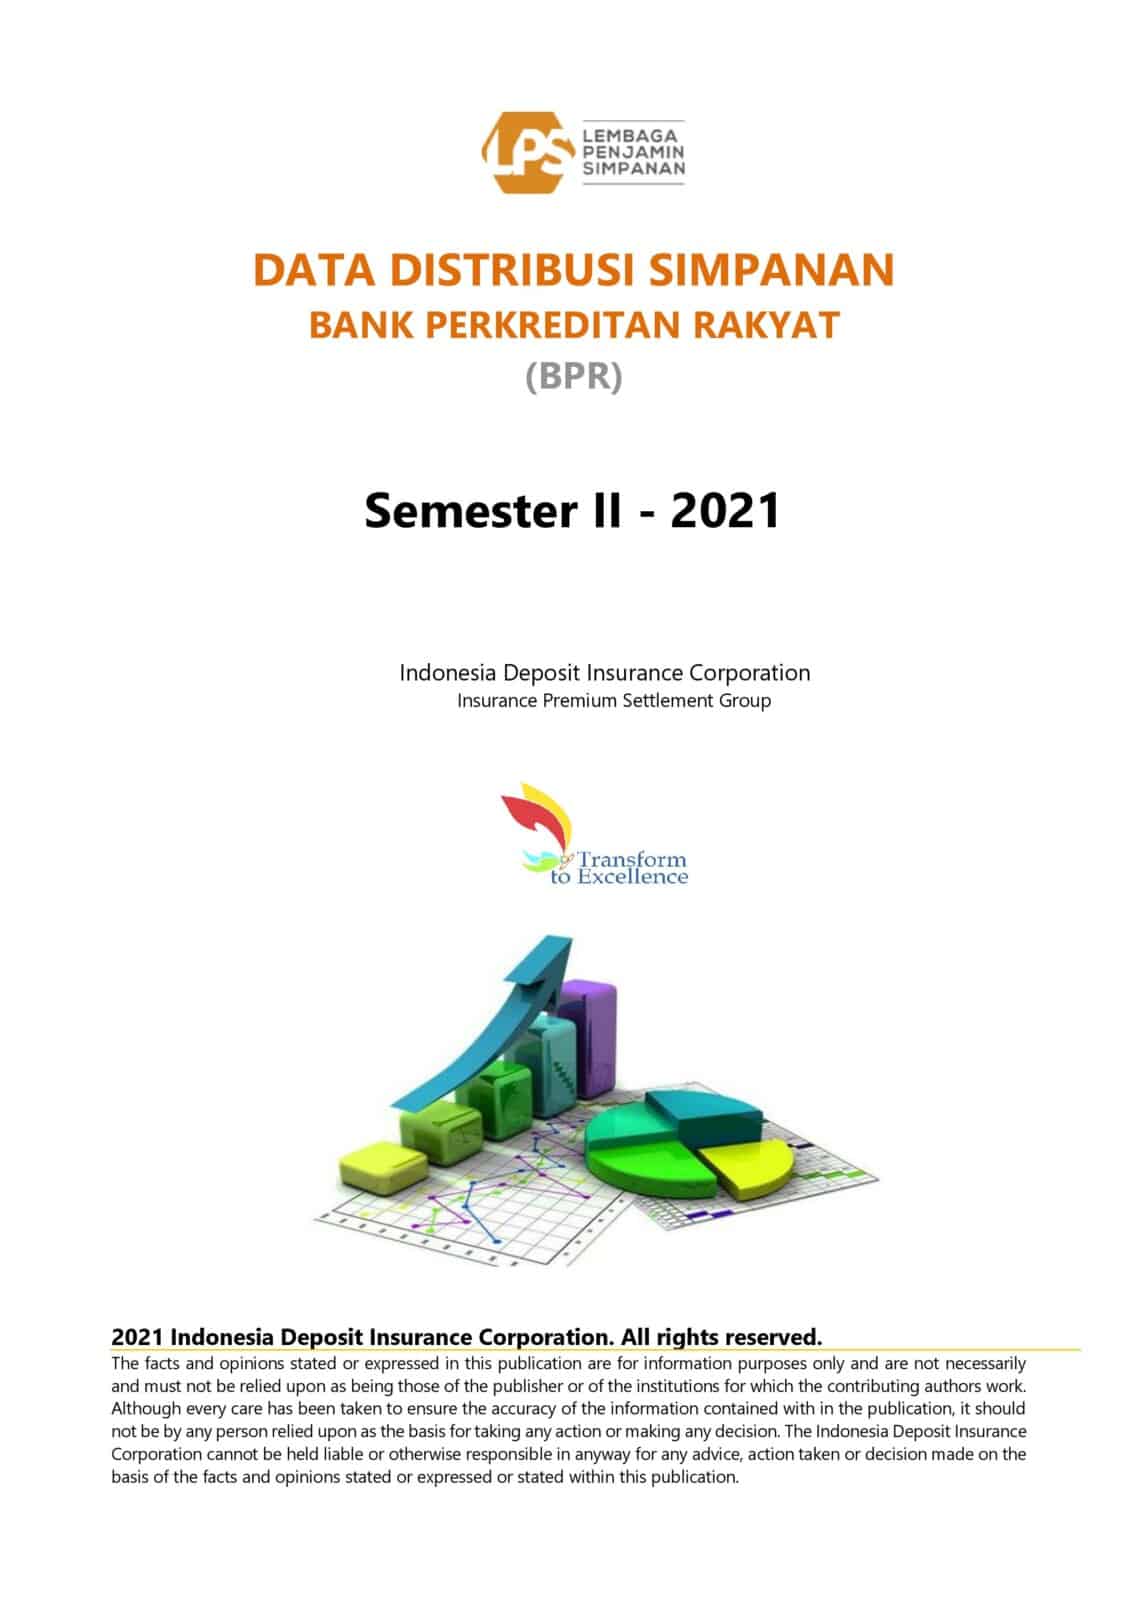 Data Distribusi Simpanan BPR/BPRS Semester II 2021